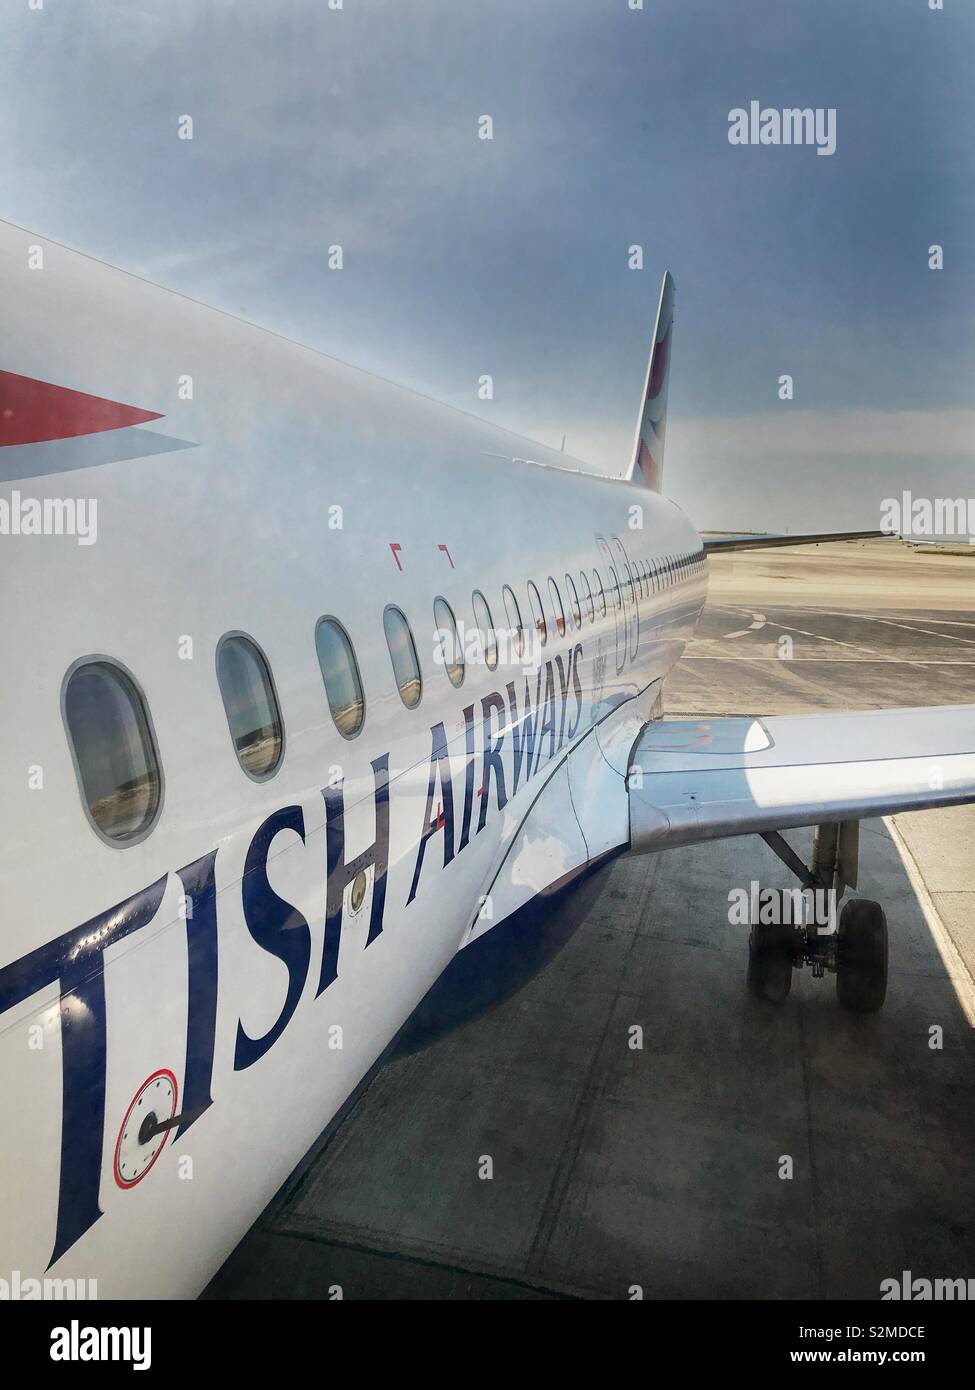 Boarding a British Airways Airbus plane Stock Photo